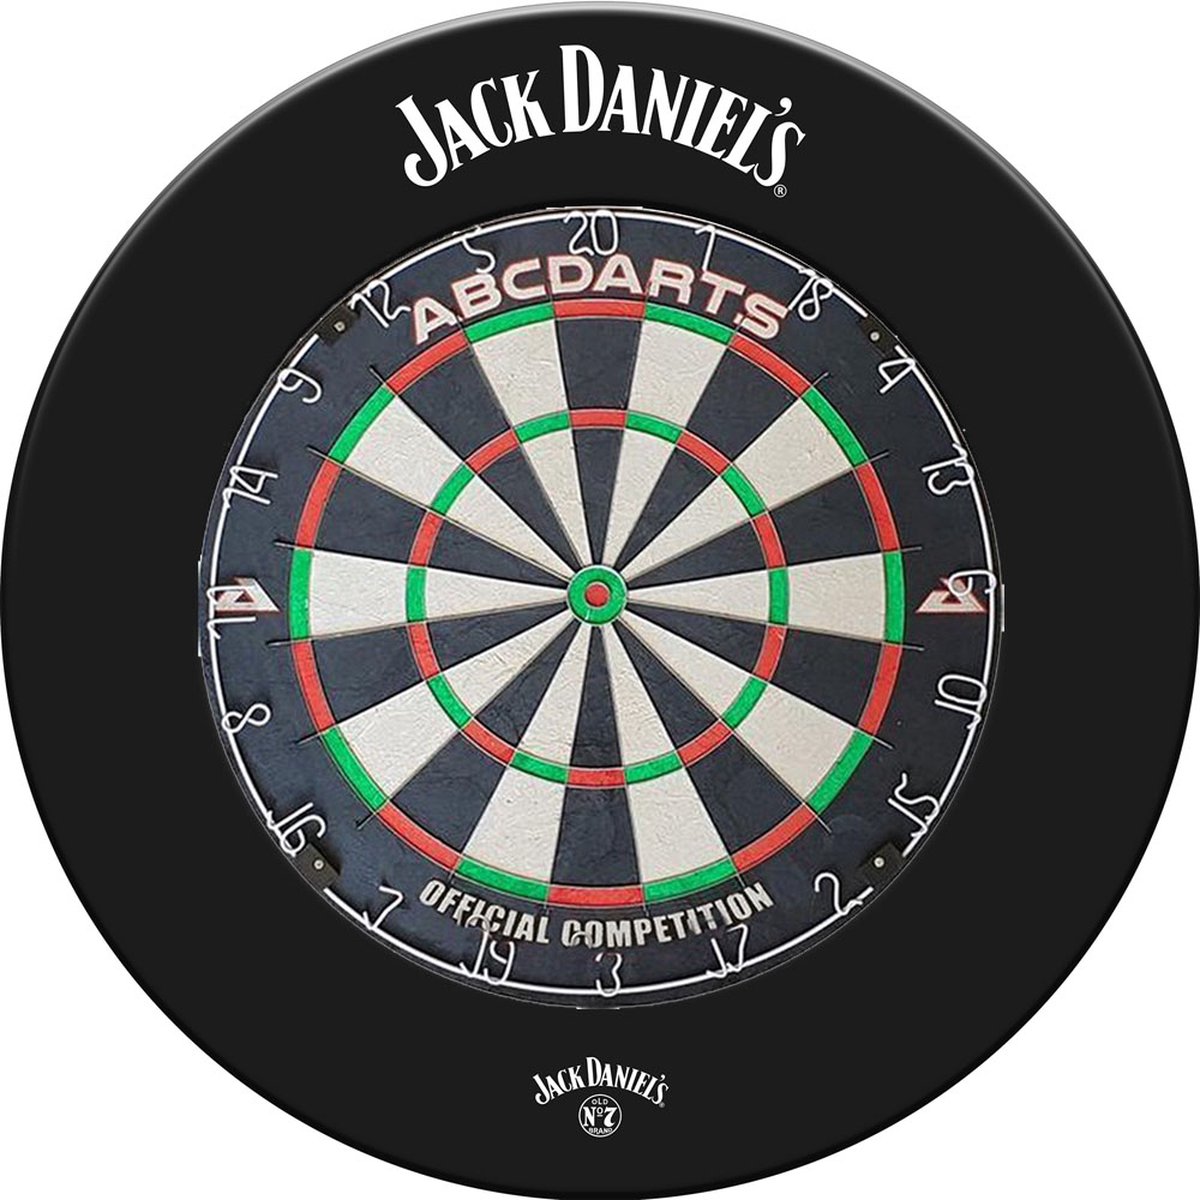 ABC Darts - Dartbord Surround Ring Jack Daniel's + ABCDarts Pro Dartbord + 2 Sets Darts